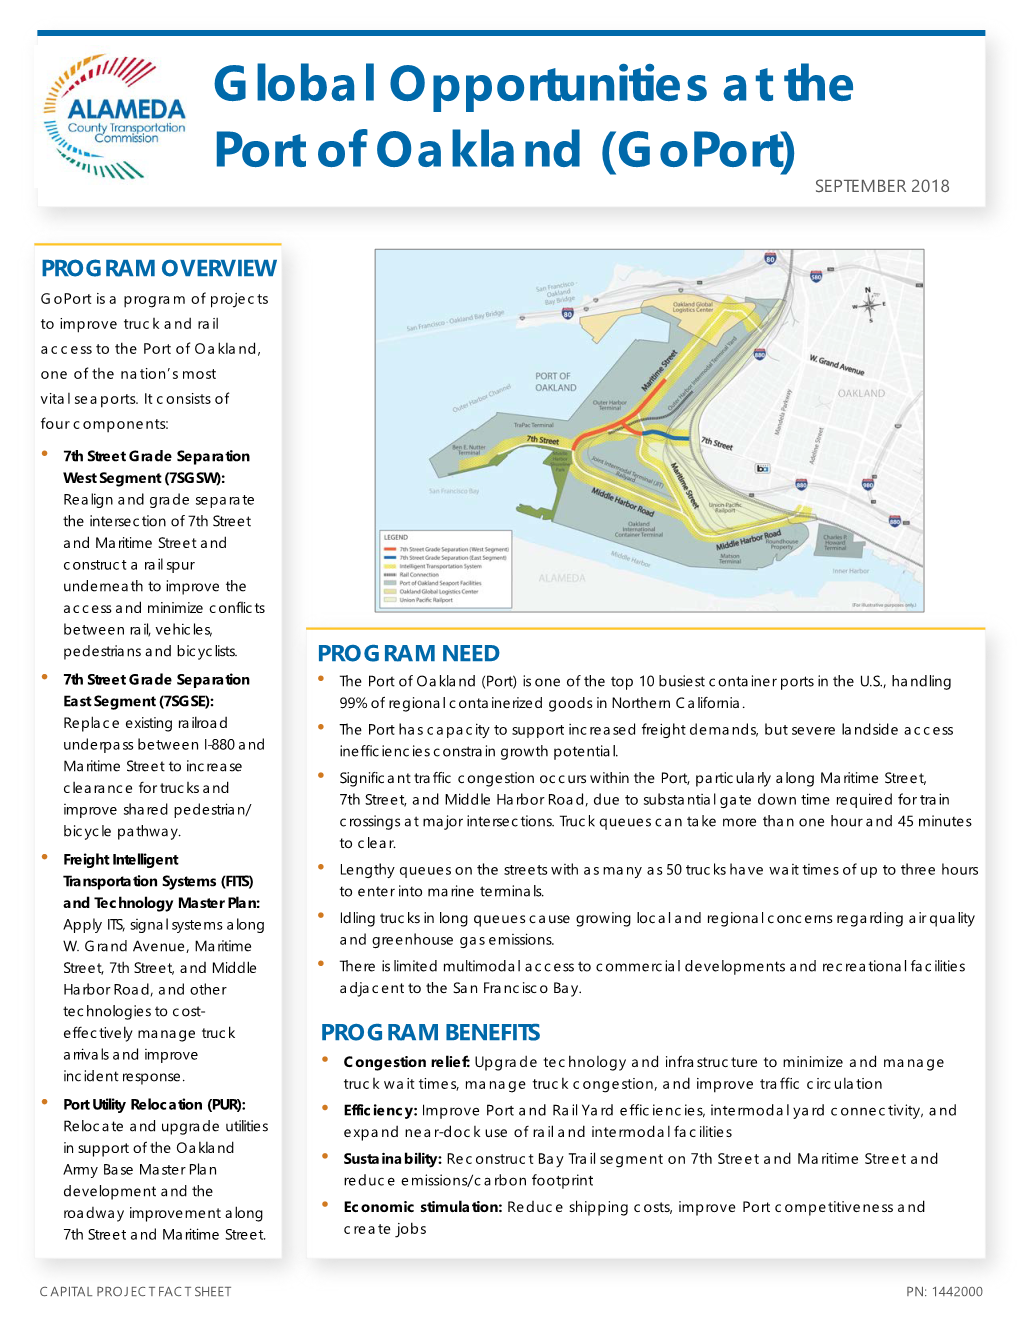 Global Opportunities at the Port of Oakland (Goport) SEPTEMBER 2018